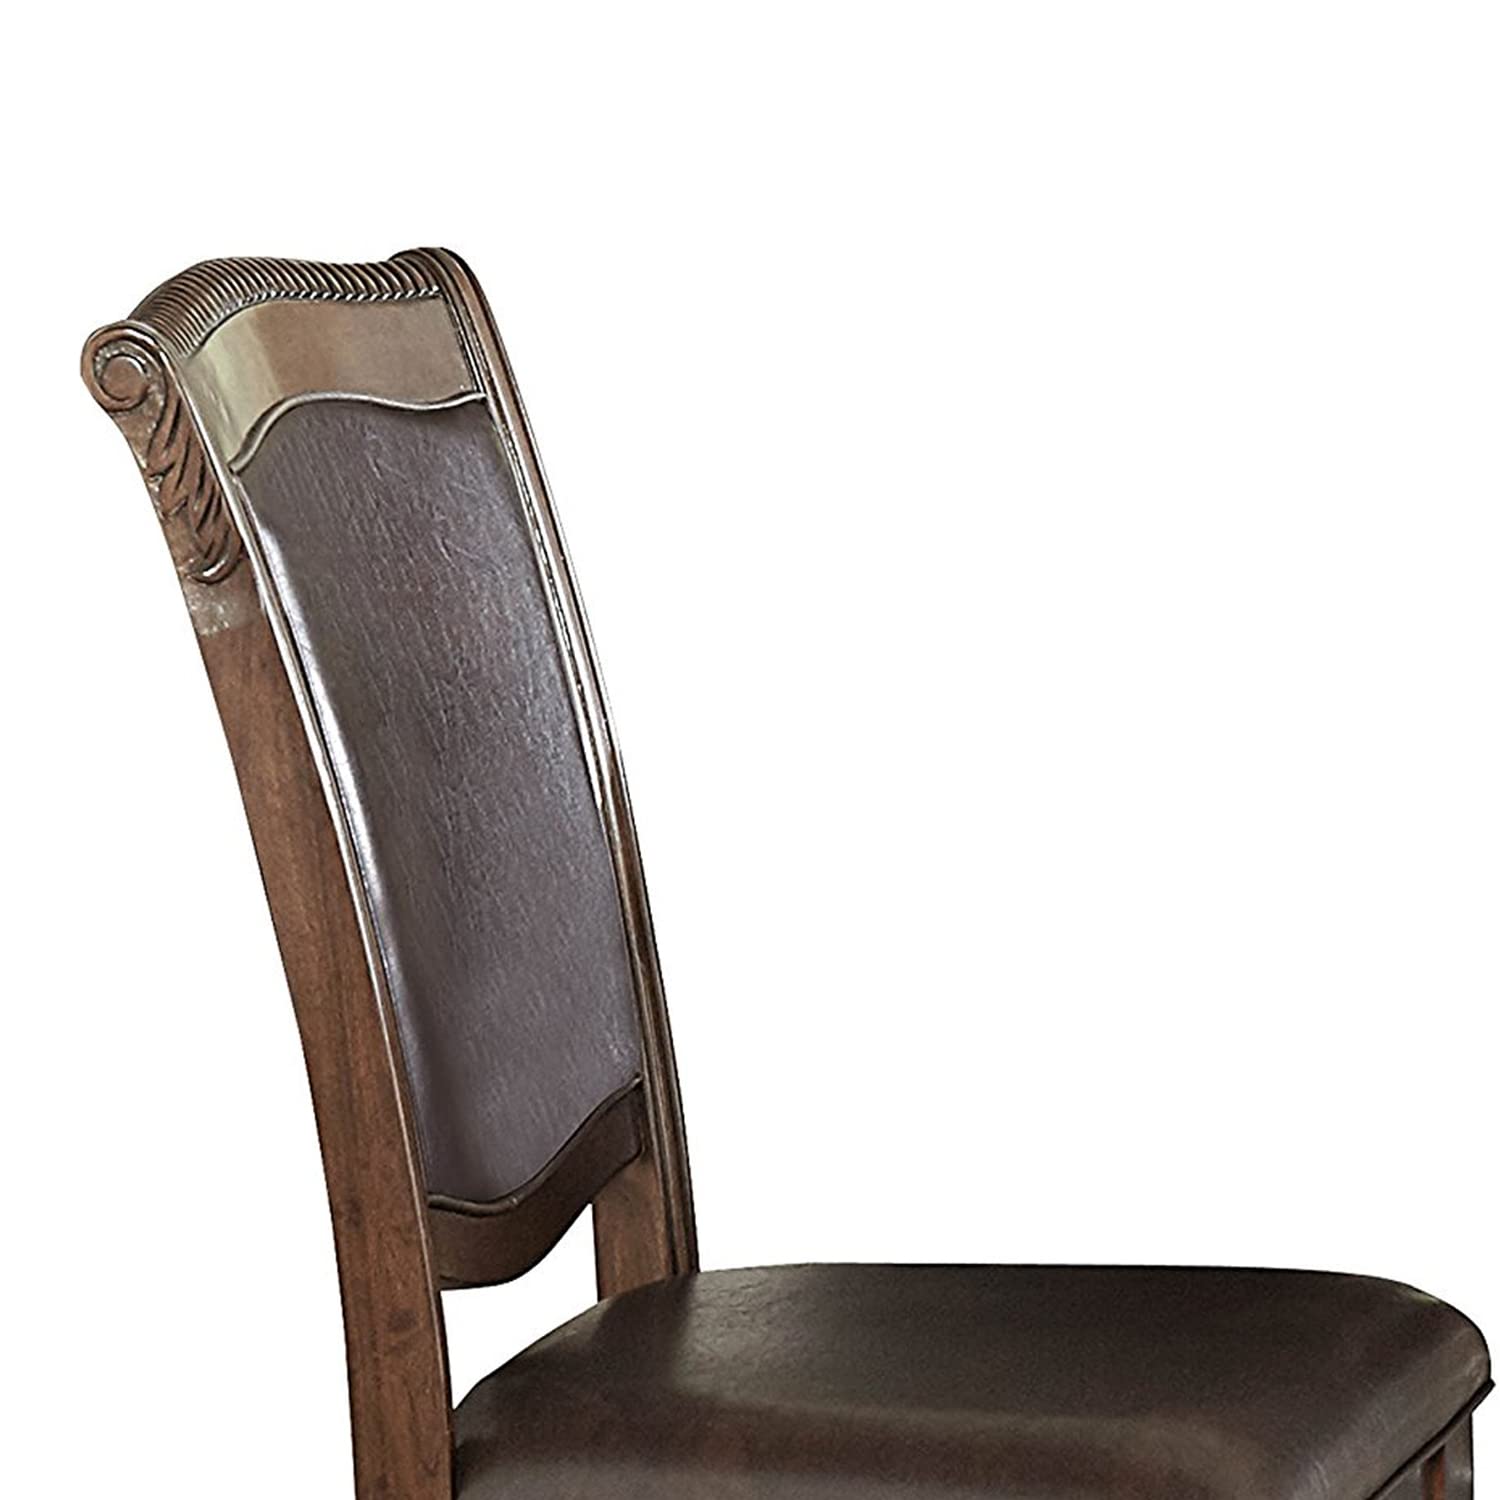 Benzara Wood & Leather Dining Side Chair, Cherry Brown & Dark Brown, Set of 2